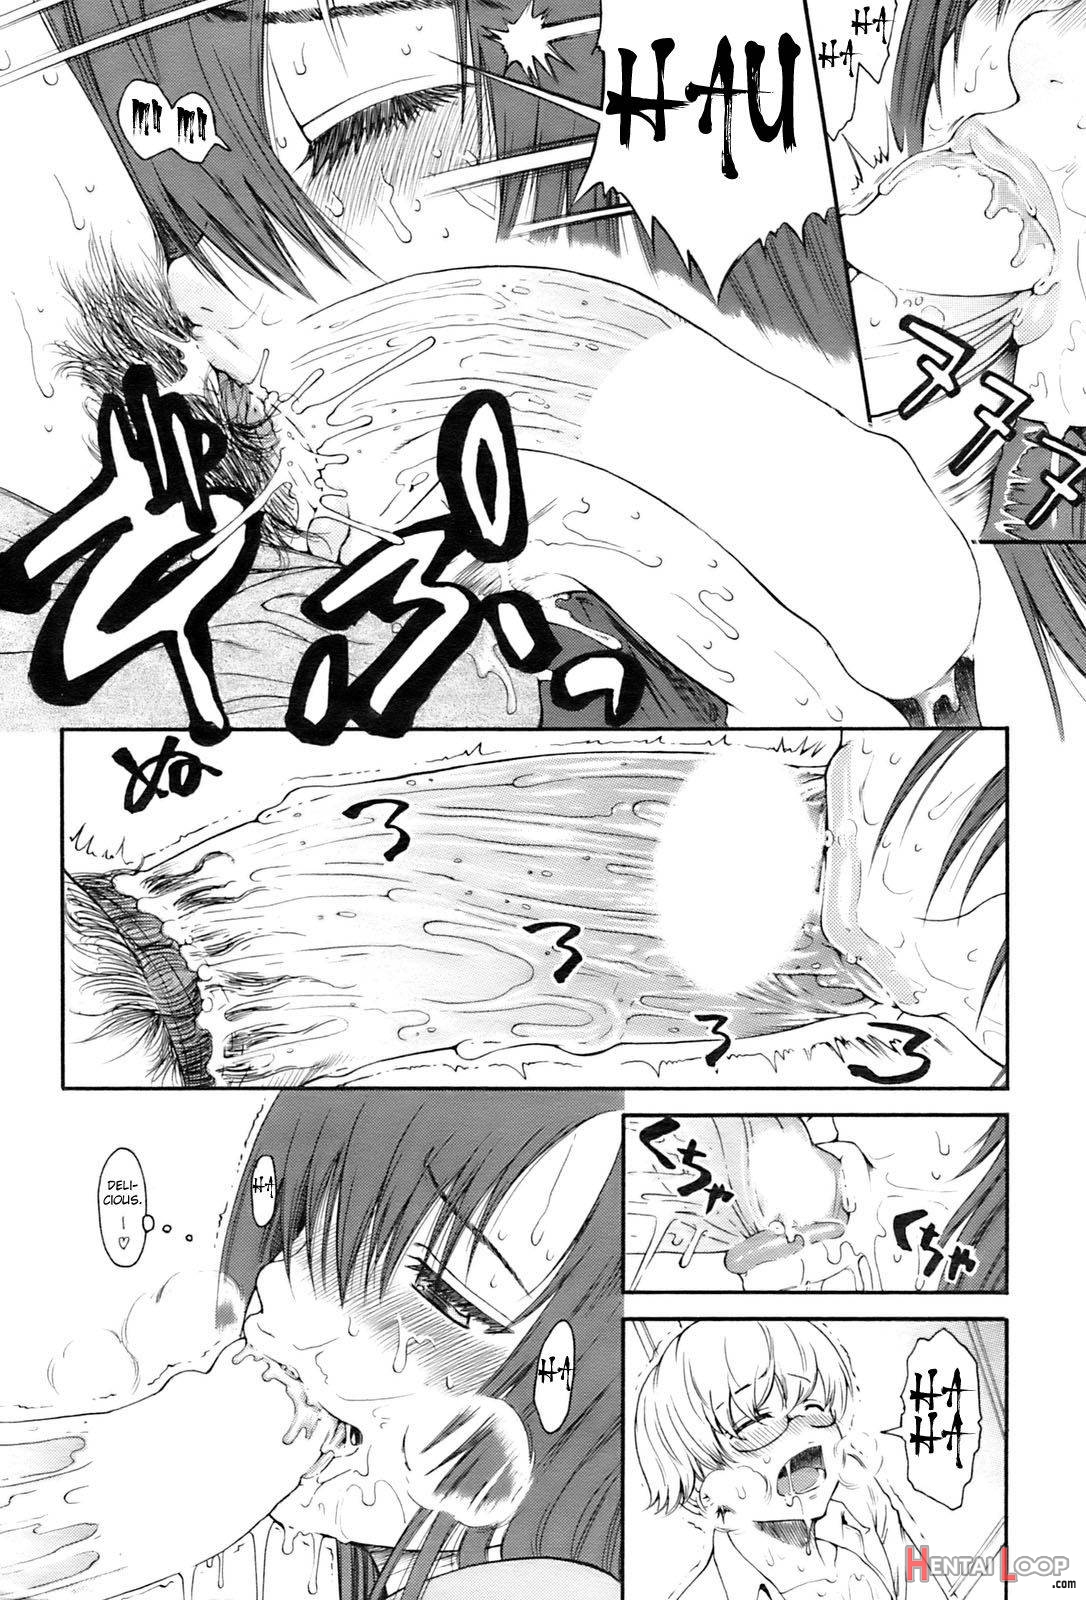 Sakura Midareru page 8